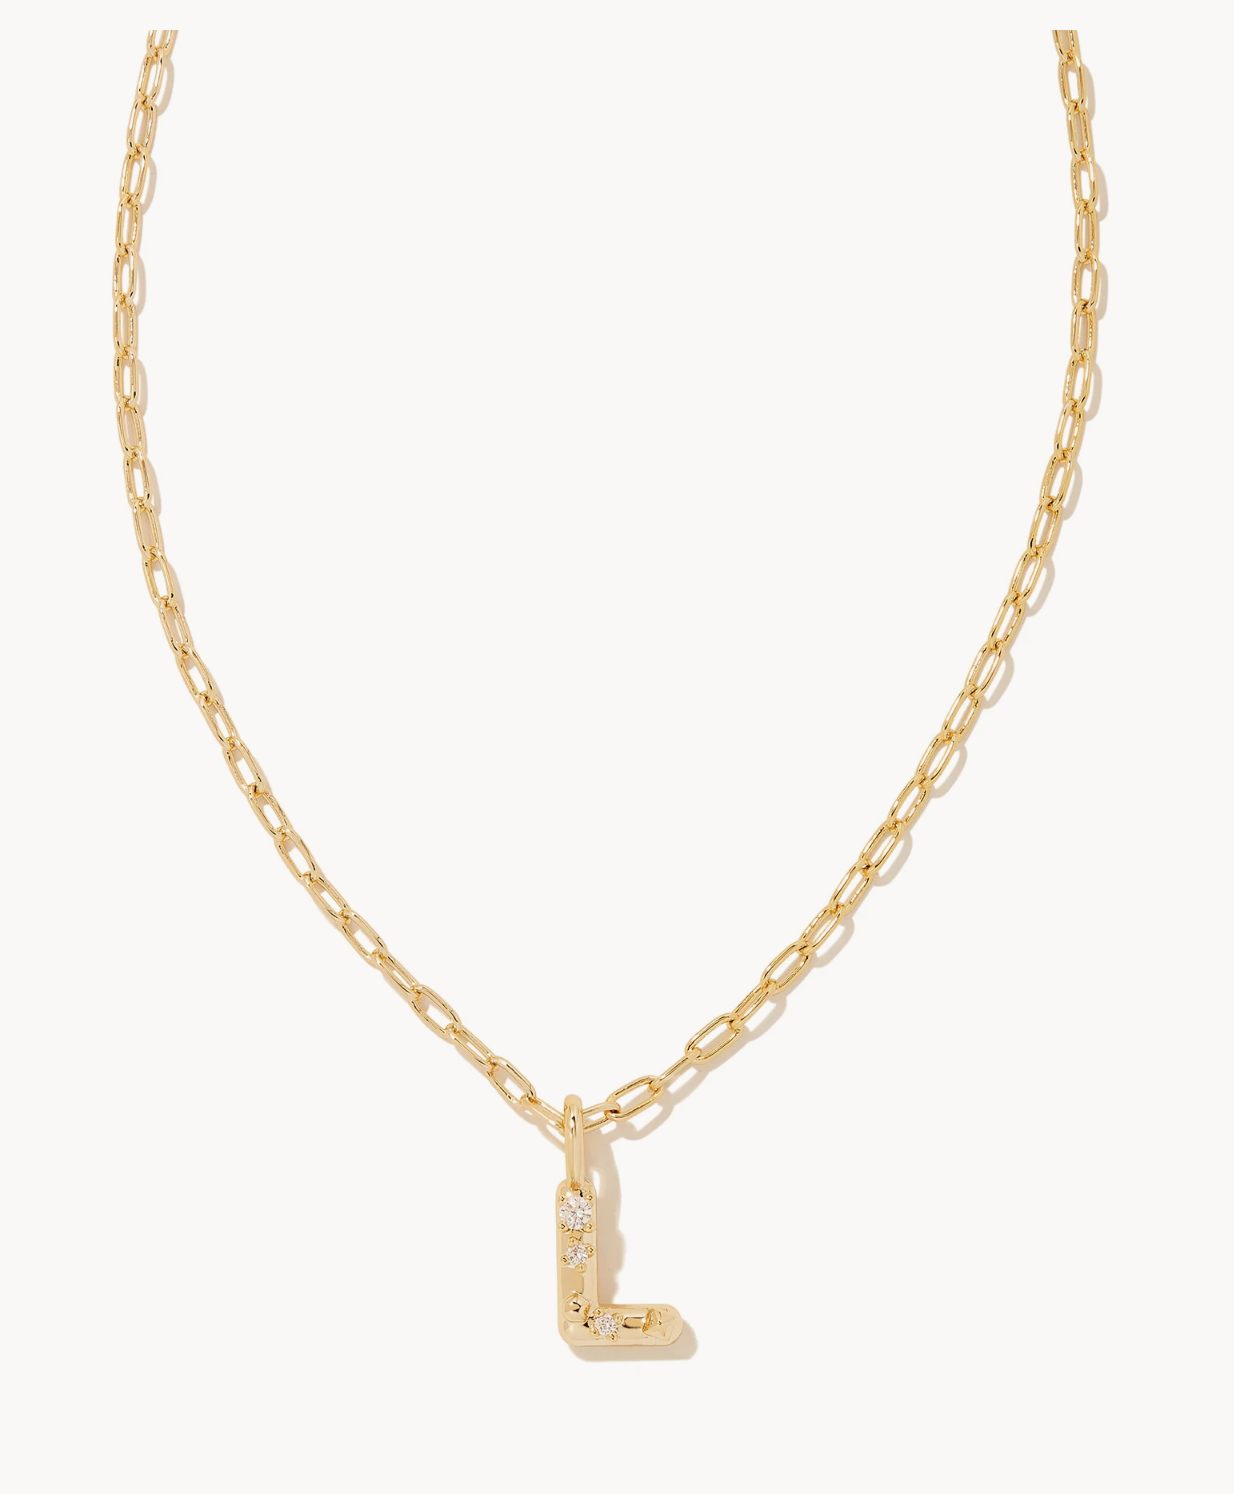 Charlie & Co. Jewelry | Gold Bold Letter L Pendant | A-Z Pendants